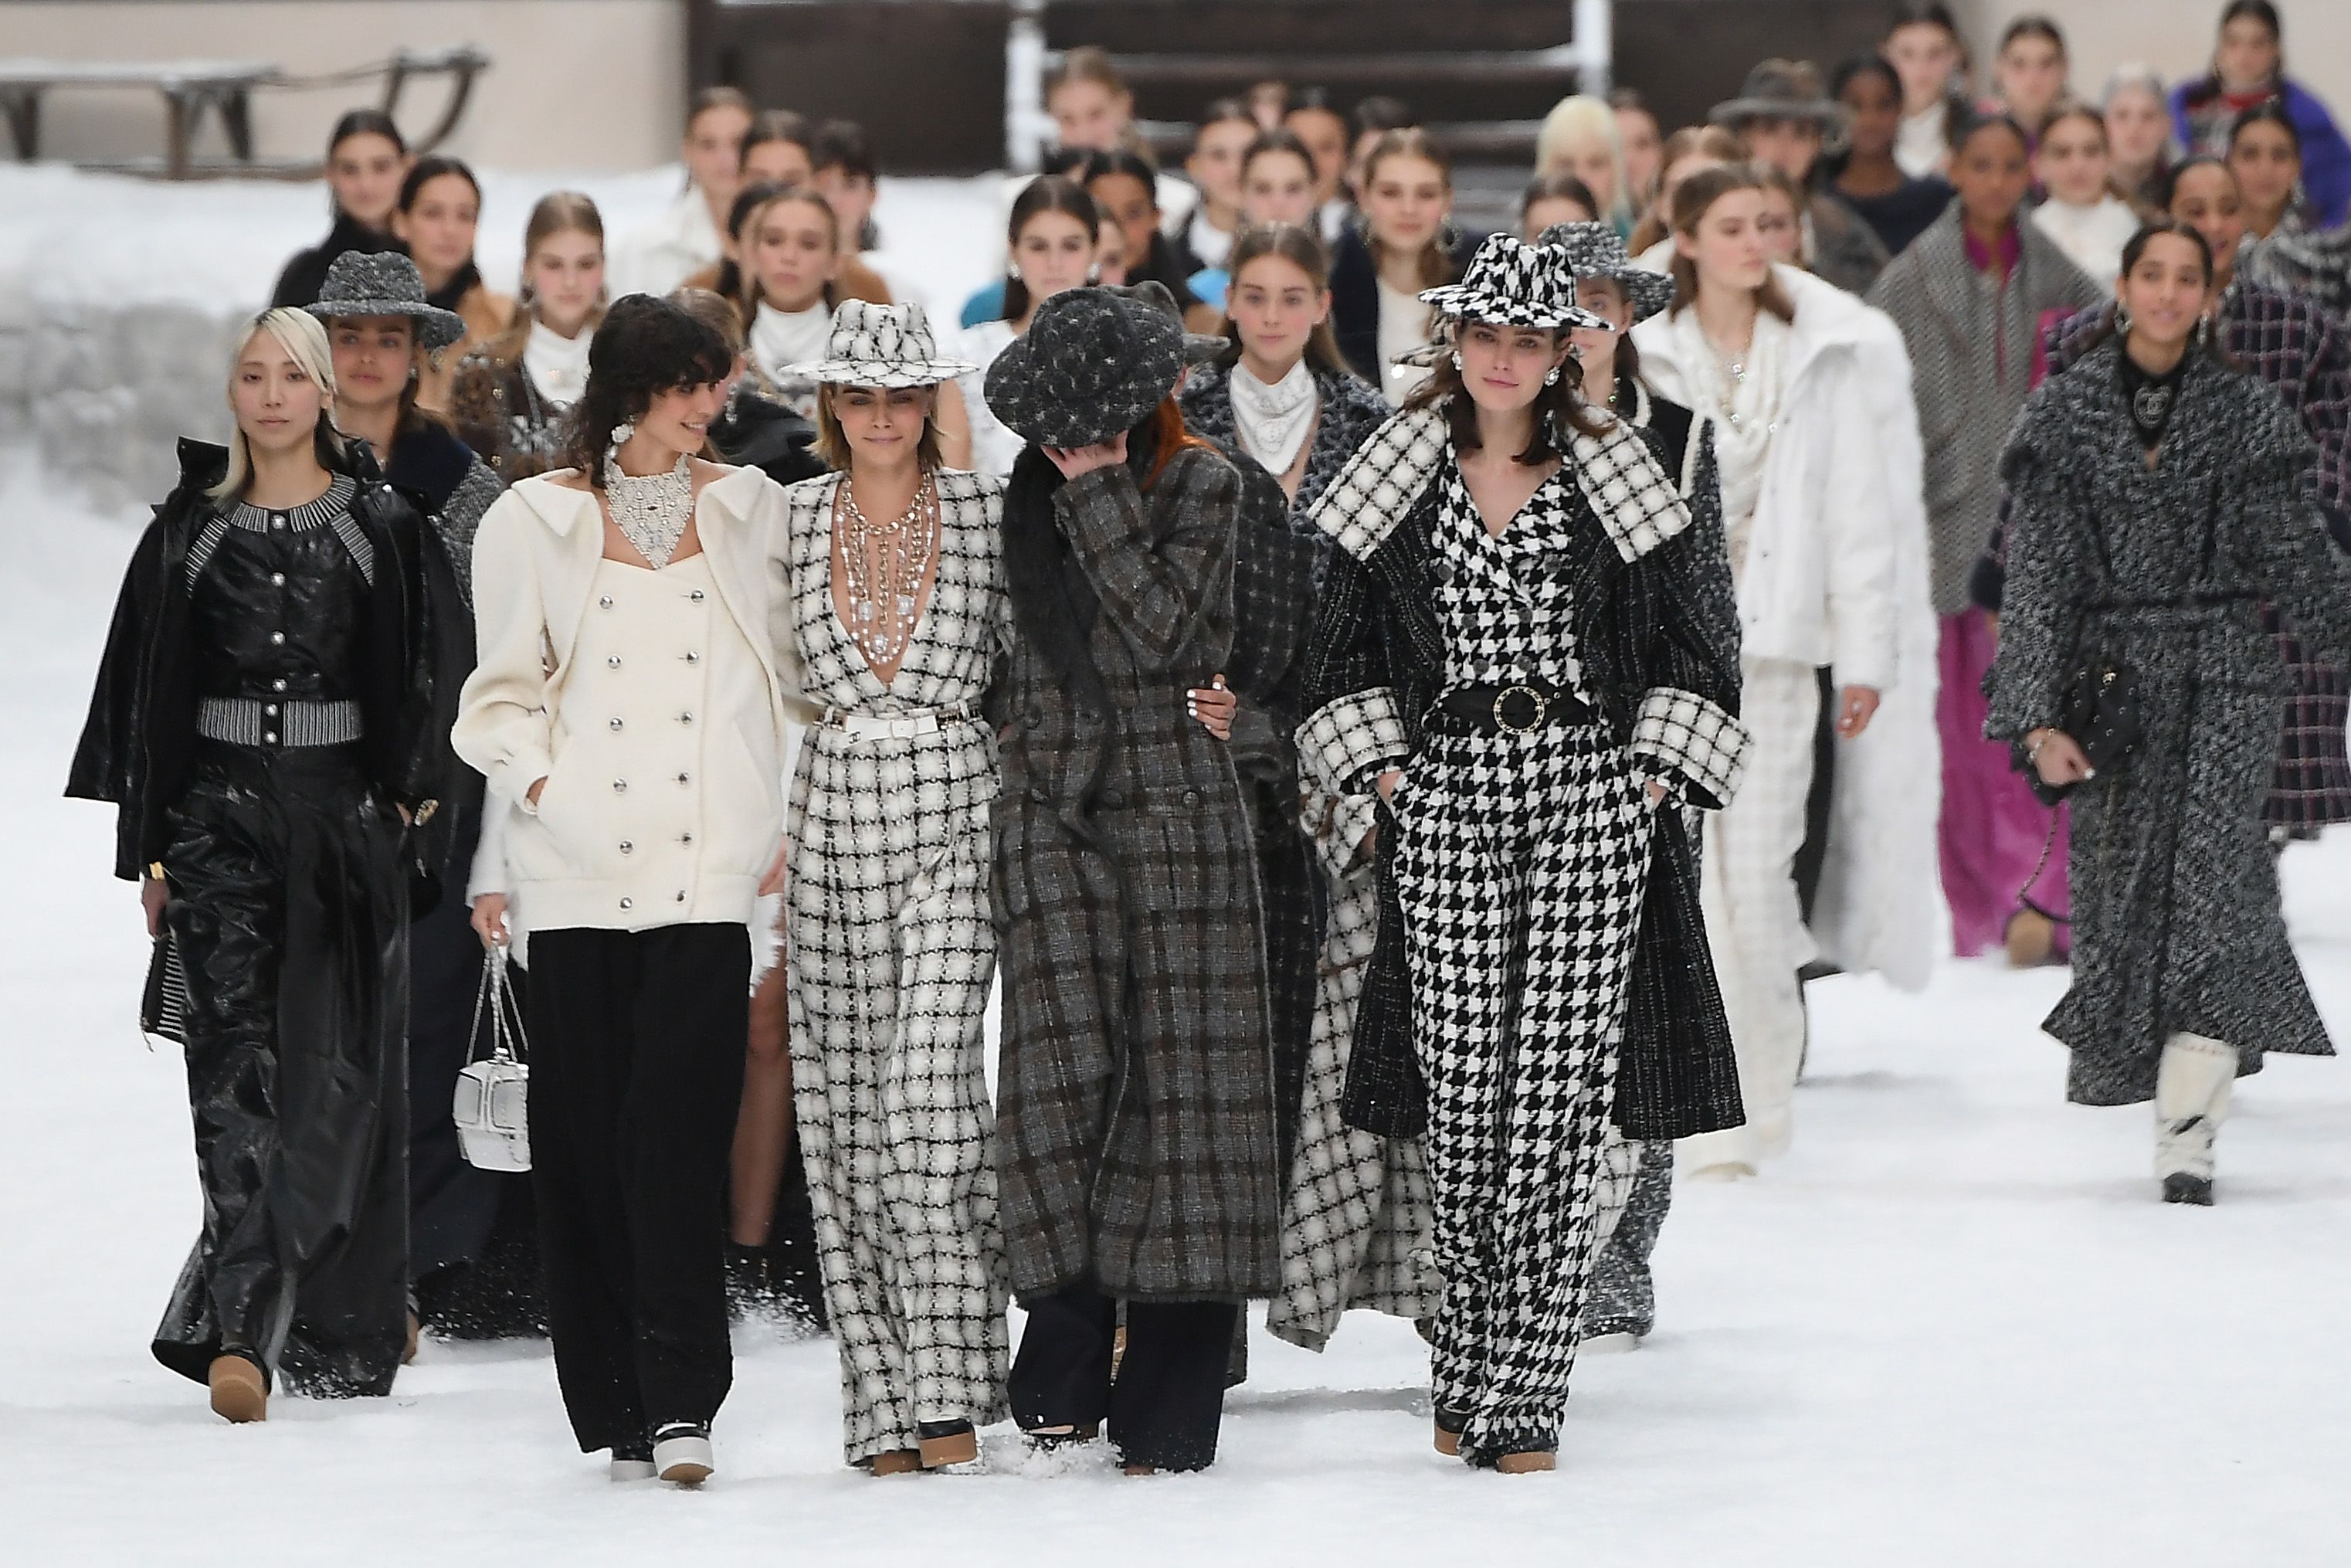 Chanel Displays Karl Lagerfeld's Last Collection in Winter Wonderland  Leaving Audience in Tears - News18